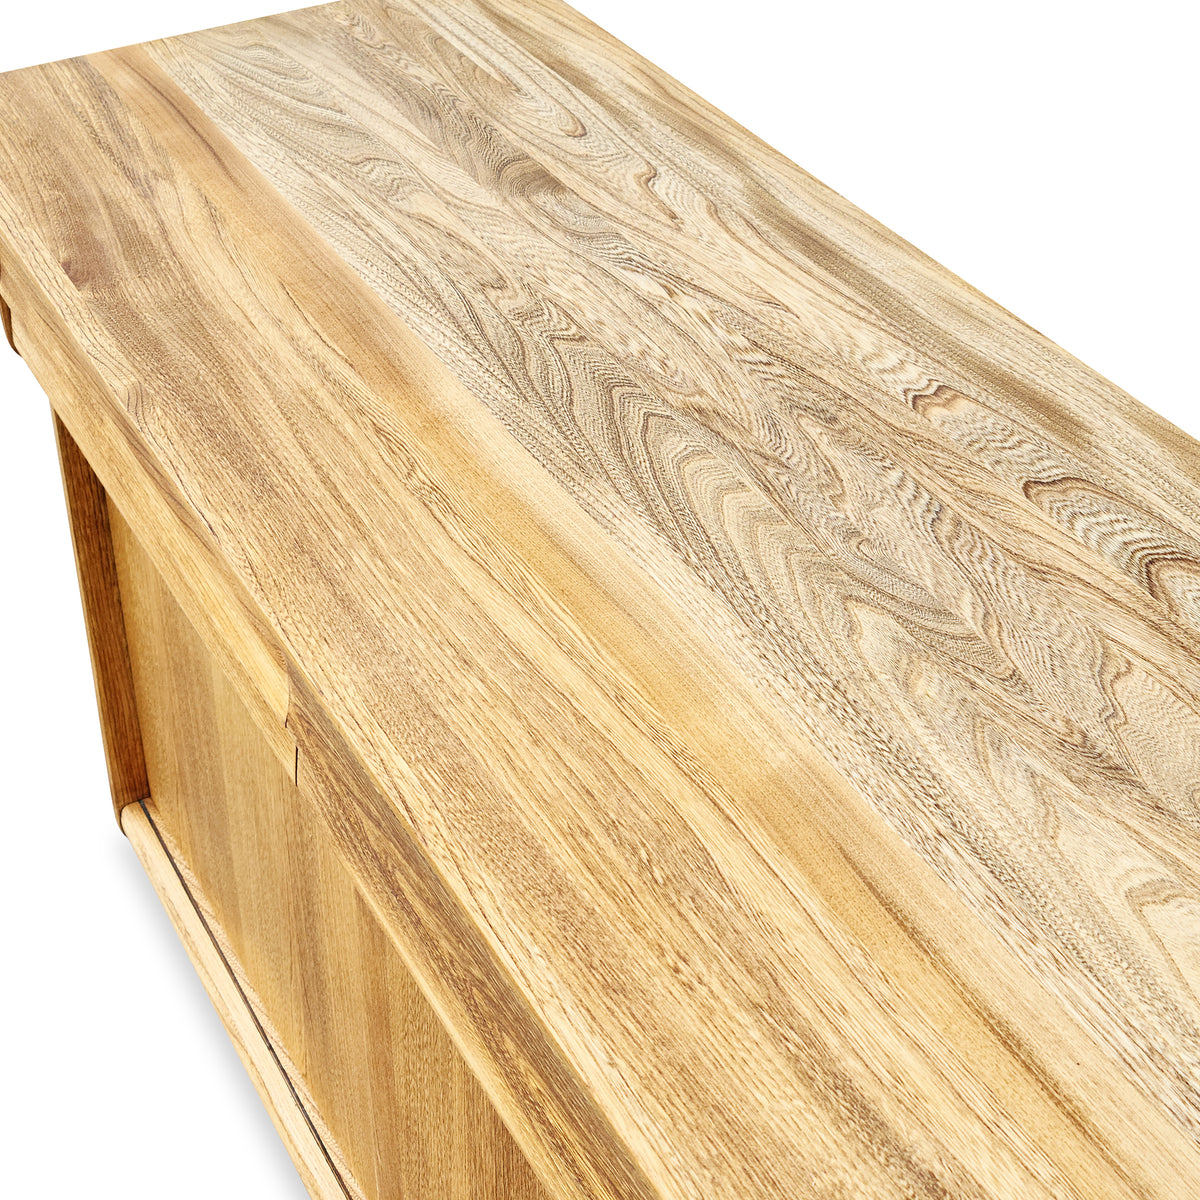 Krug Compact Ash Sideboard